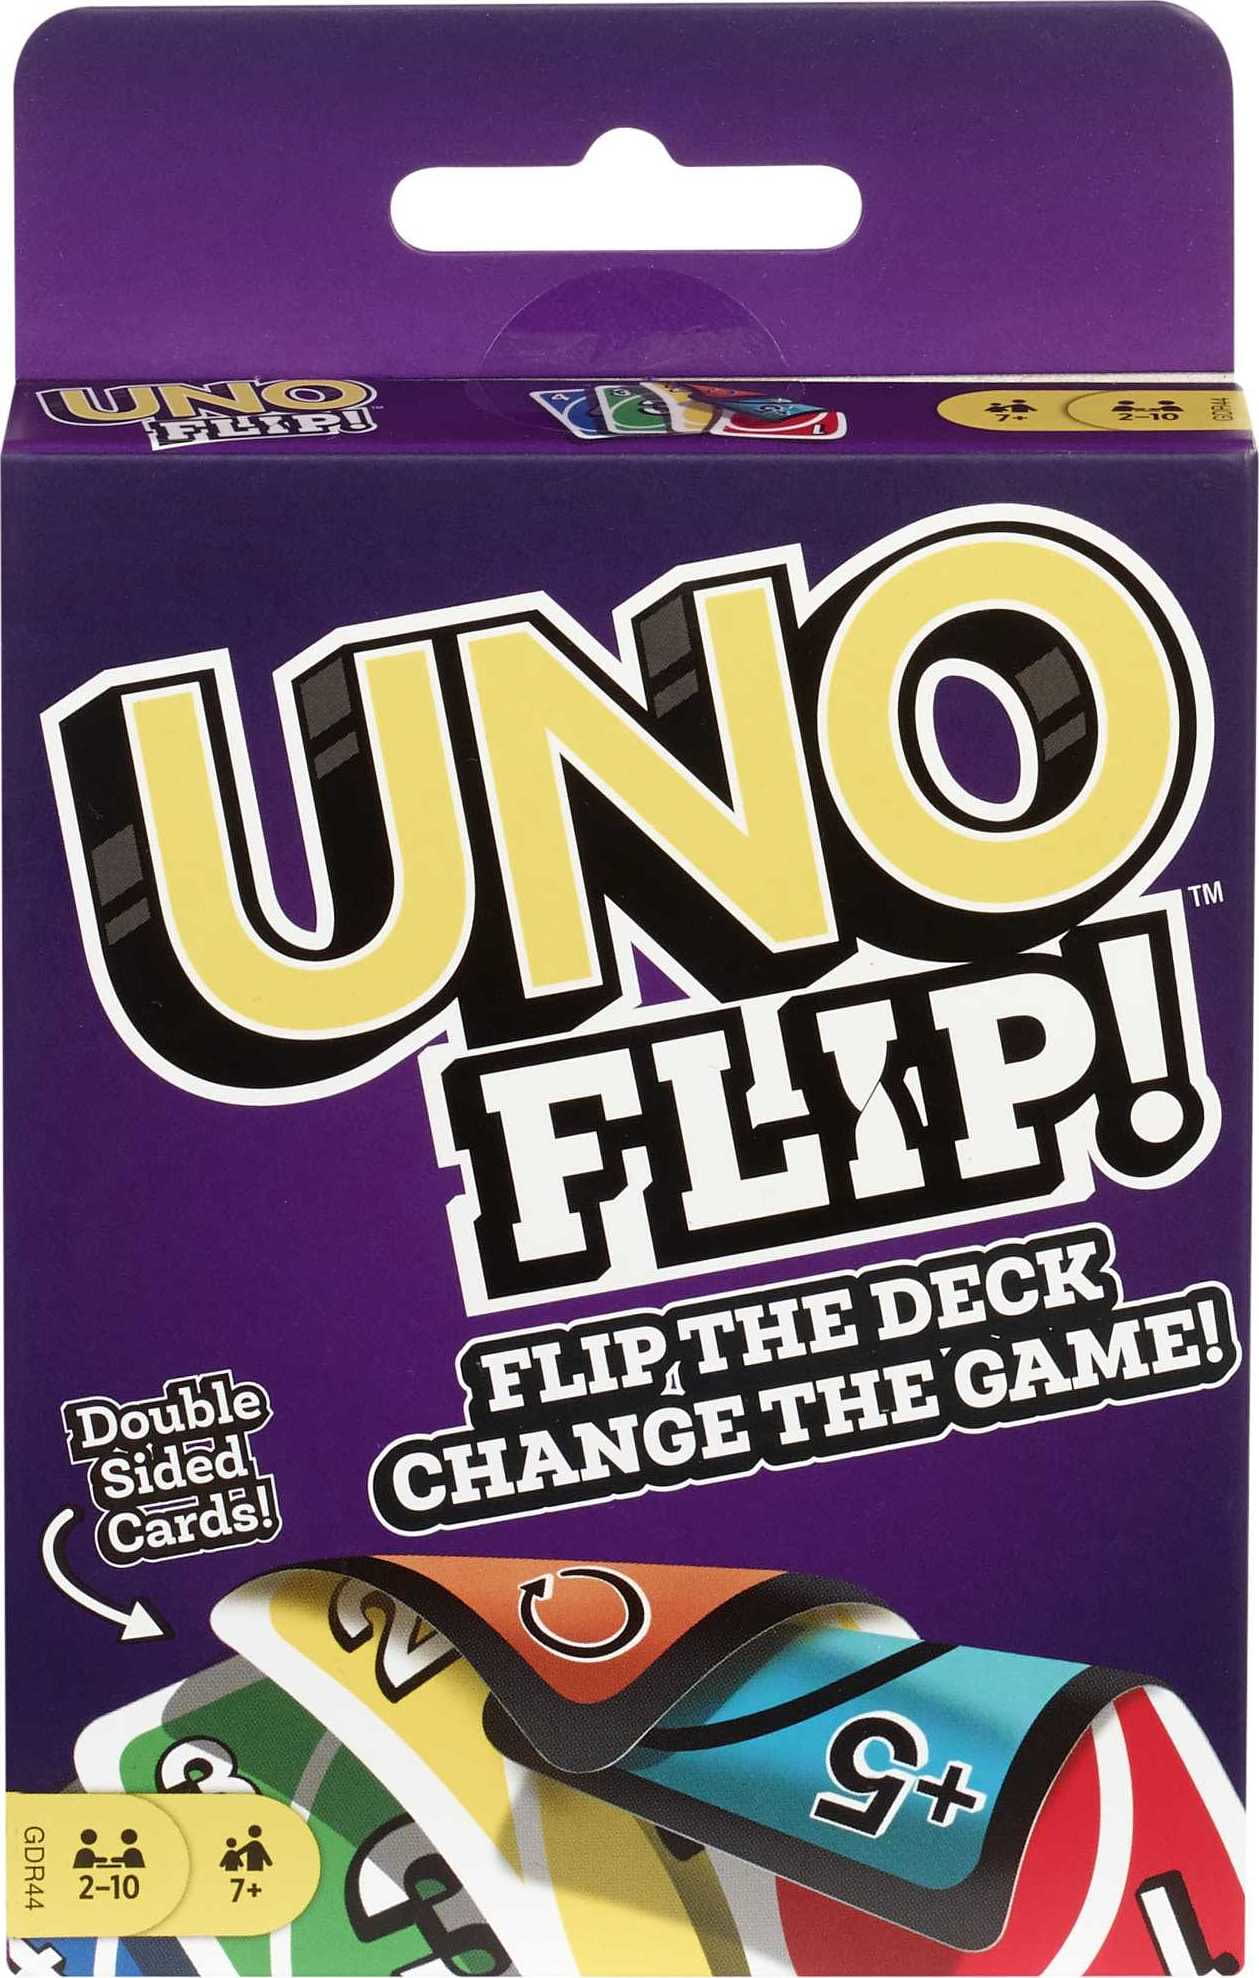  Mattel Games UNO Minimalista Card Game Featuring